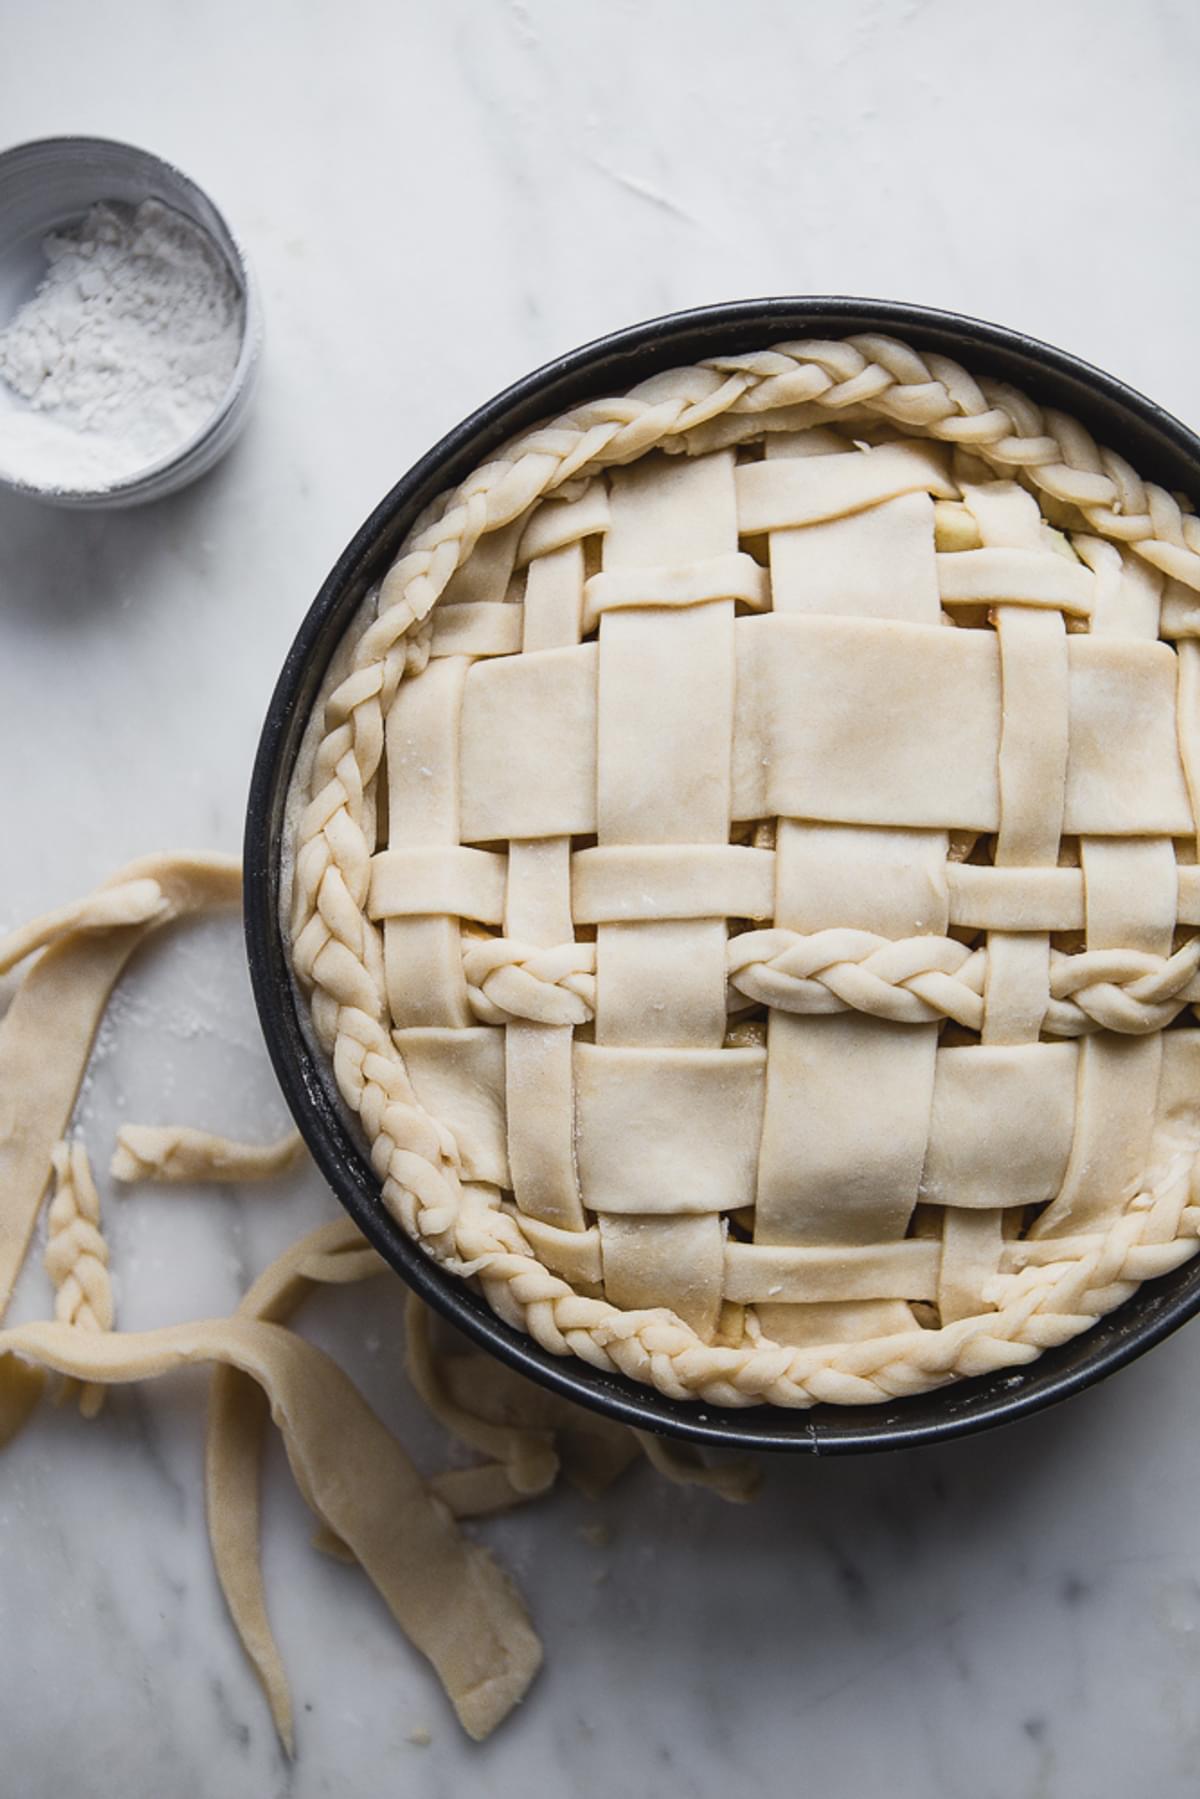 braided lattice crust on an apple pie